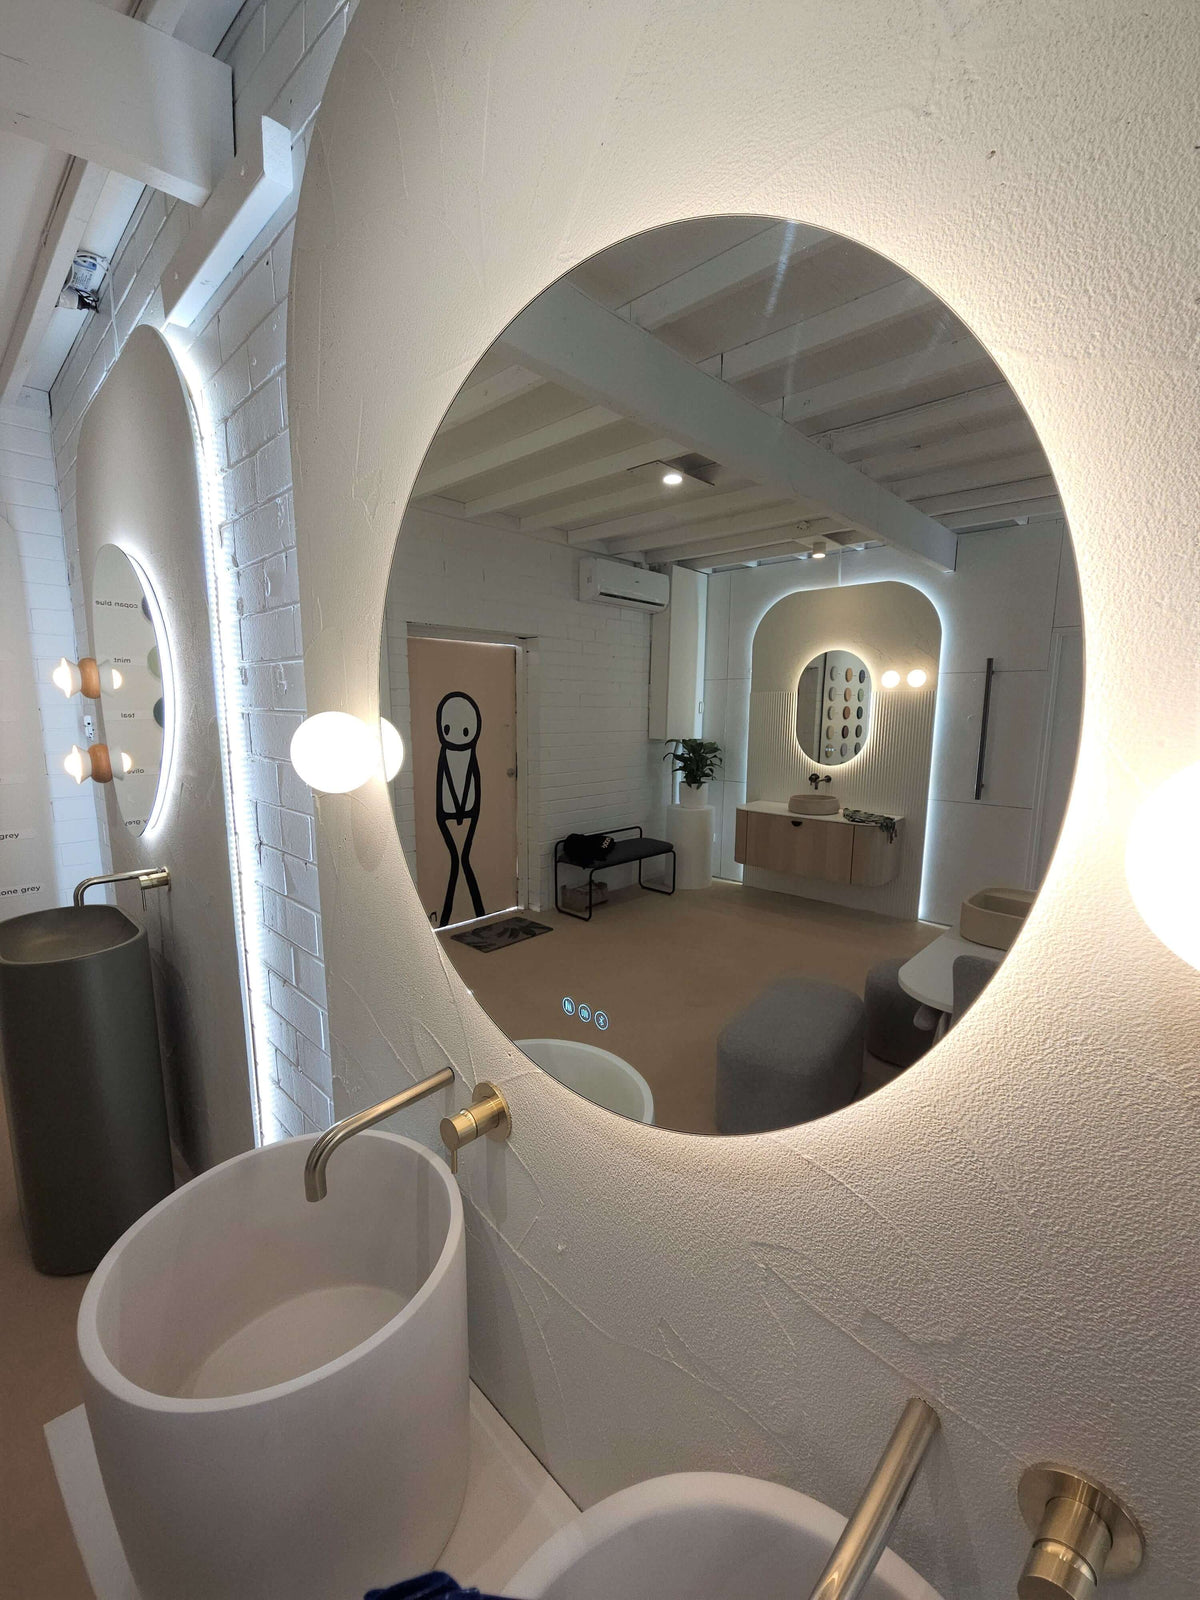 The Amalfi ~ (Lux edition) ~ Invogue Smart mirror